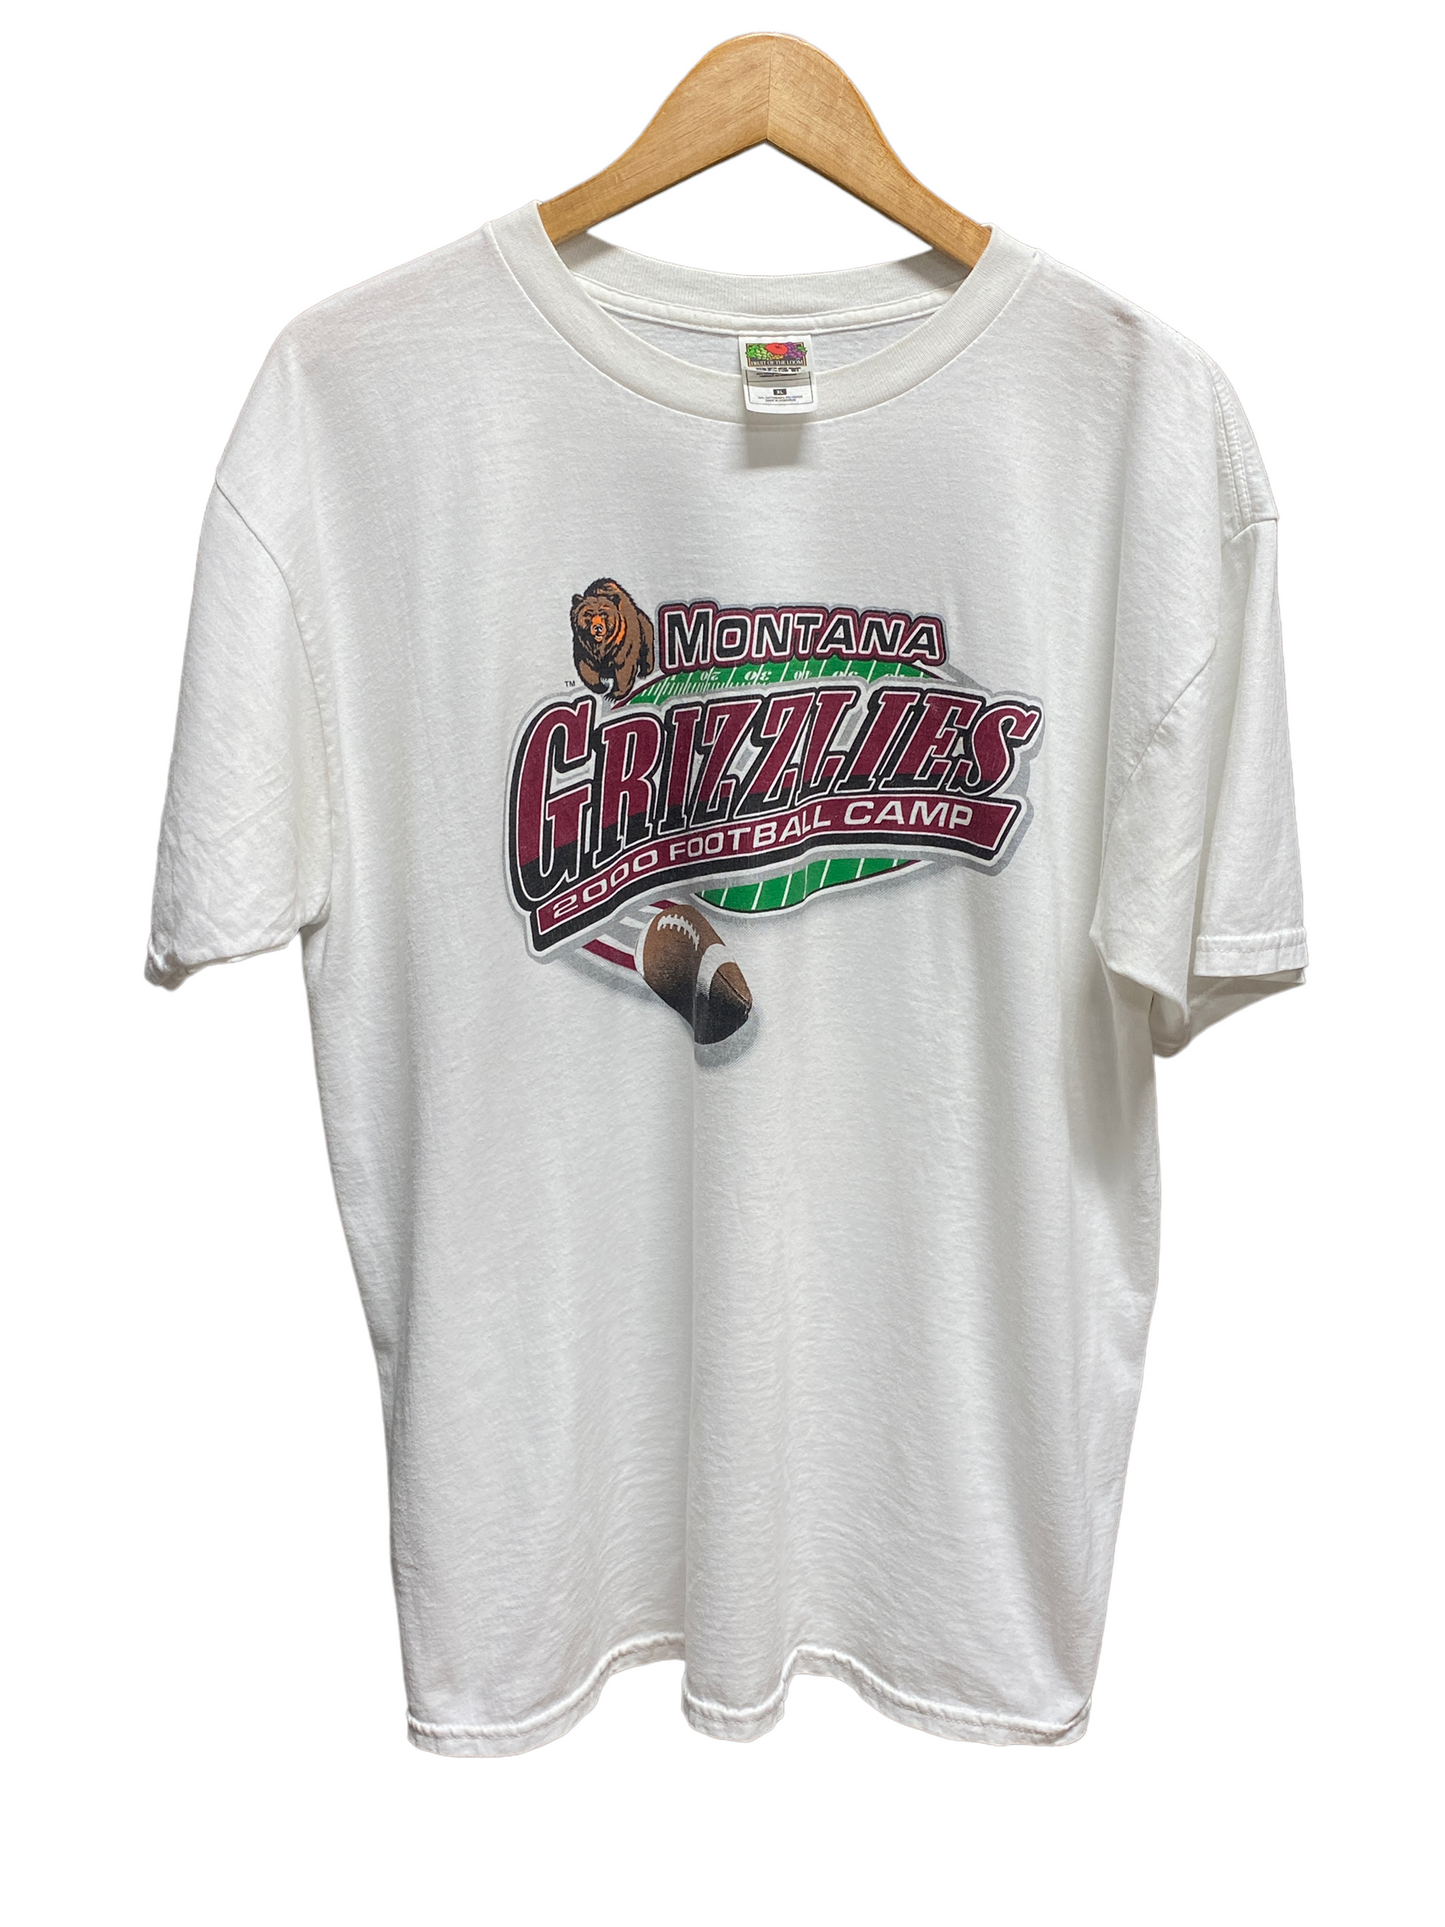 Vintage 2000 Montana Grizzlies Football Camp Tee Size XL